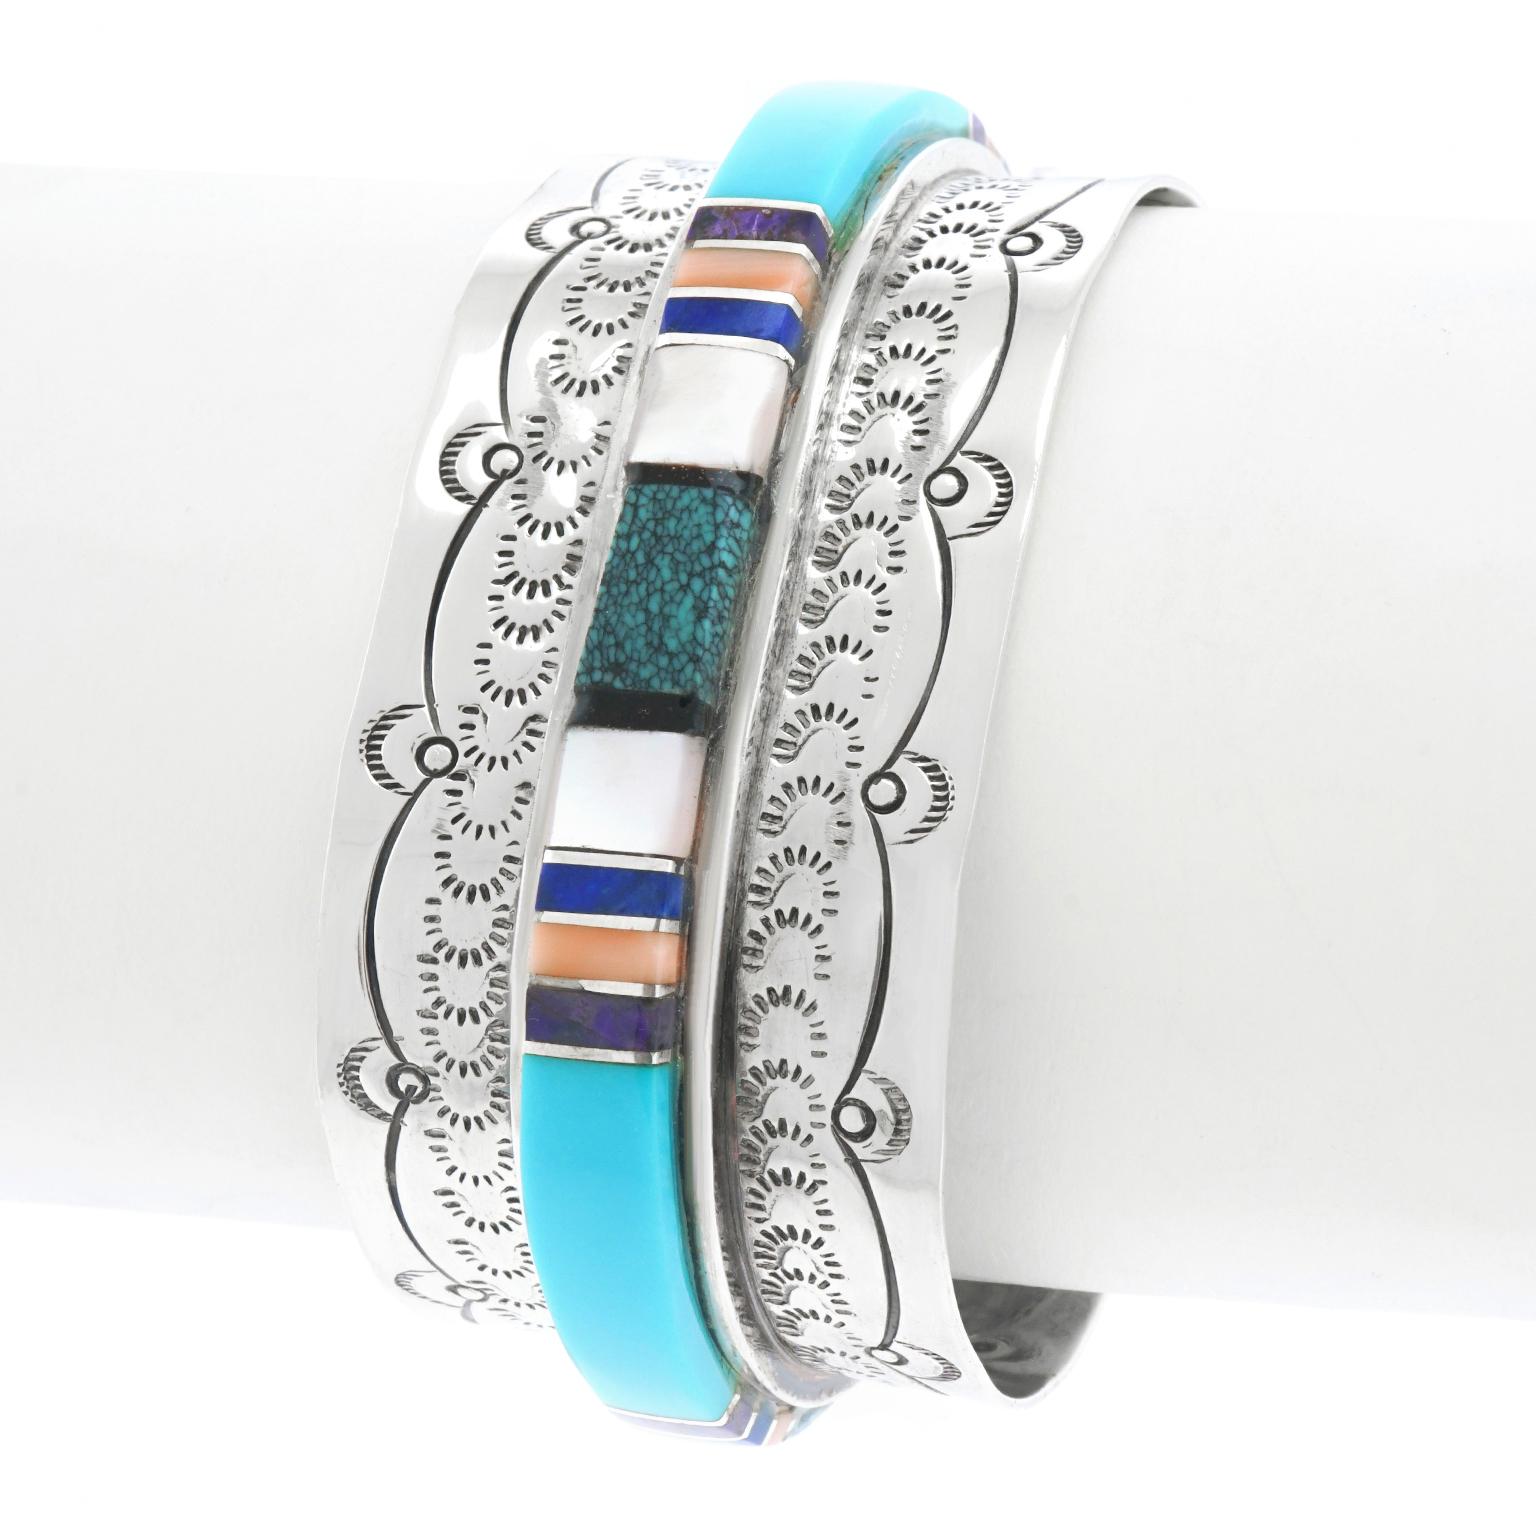 Navajo Stone-Set Sterling Cuff Bracelet 1